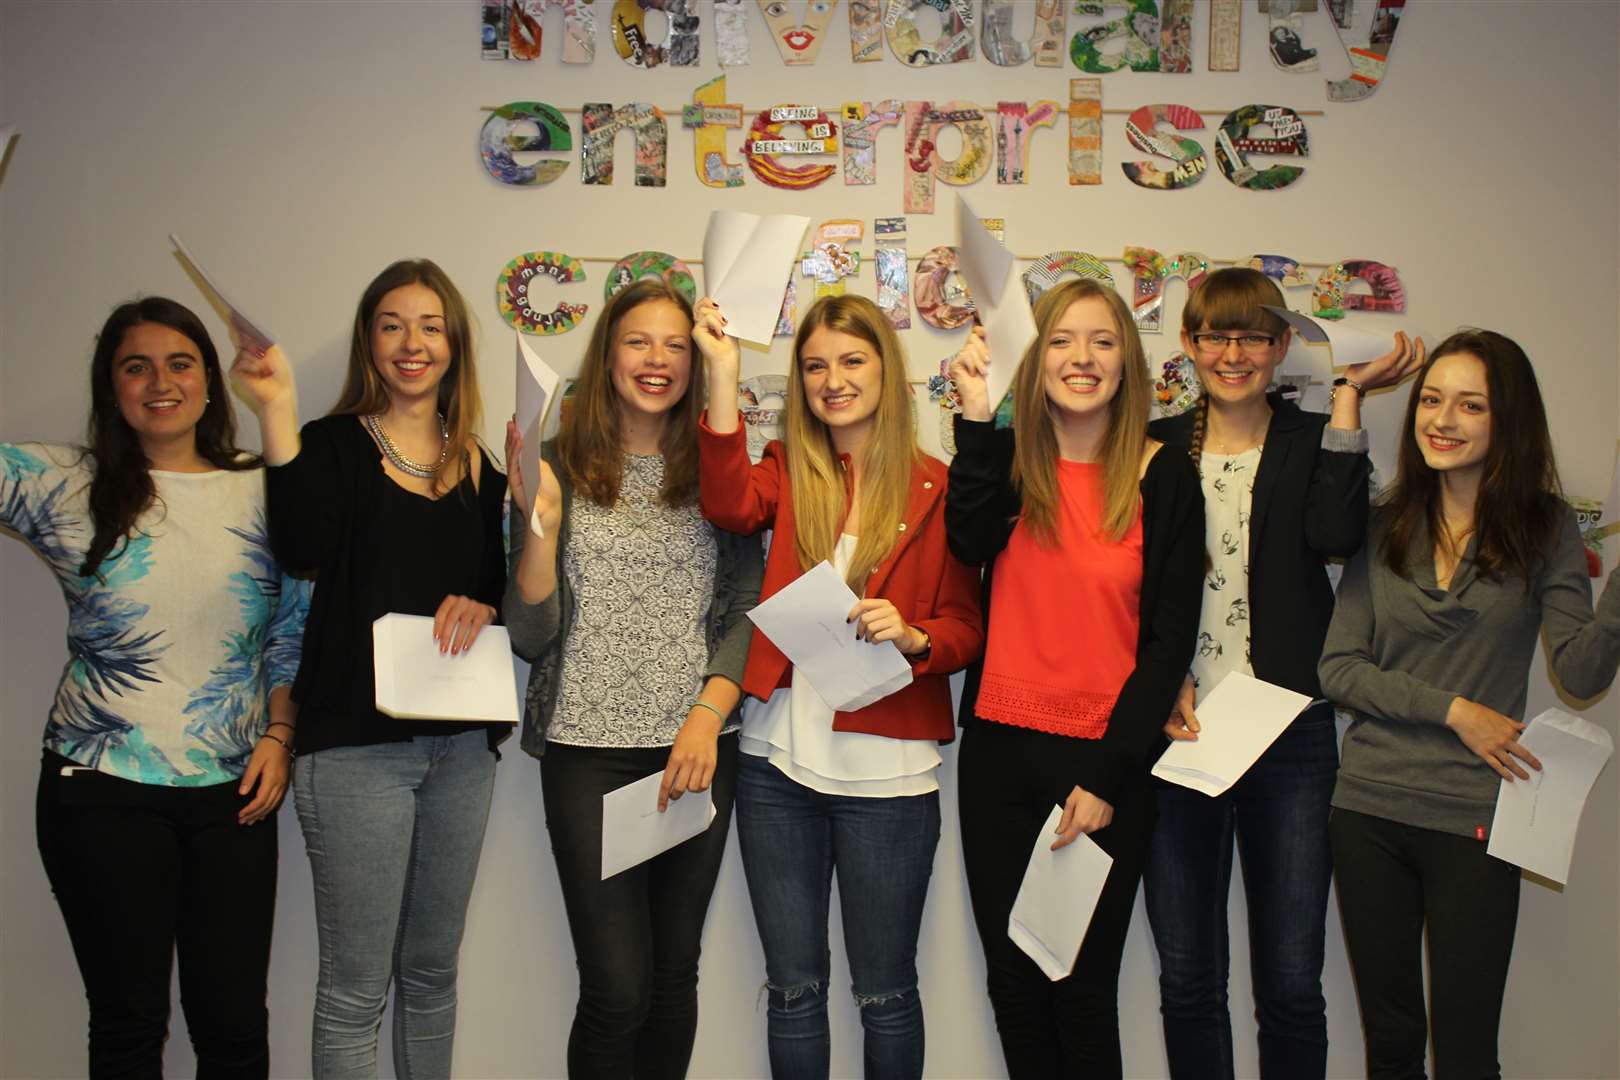 Invicta Grammar School pupils celebrate their results in Maidstone